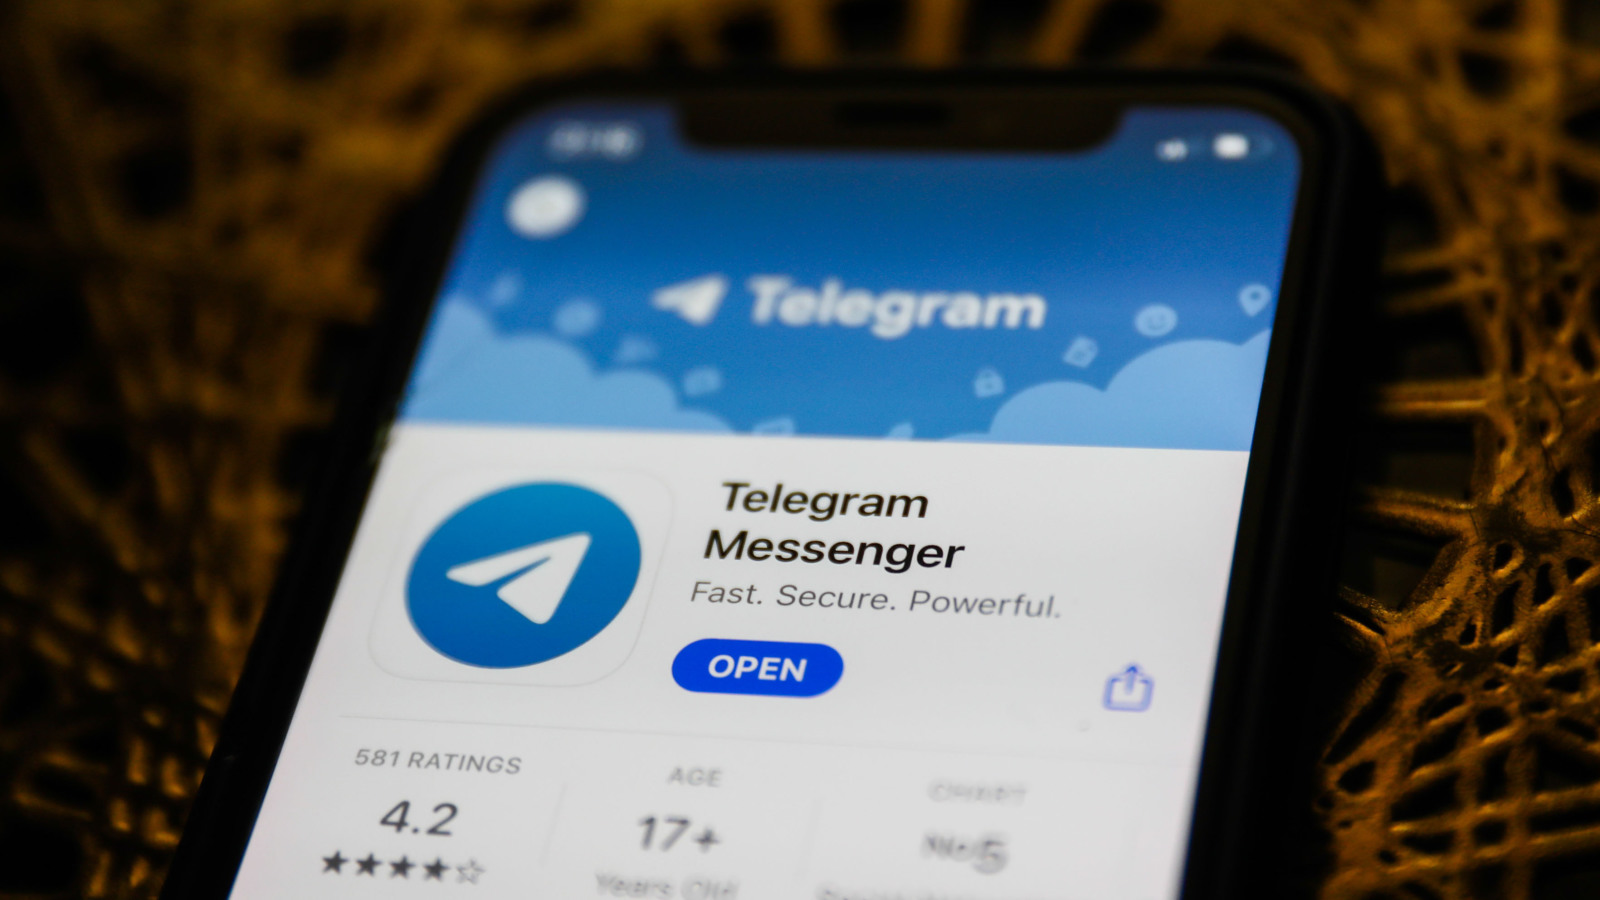 Telegram marketing for online business growth